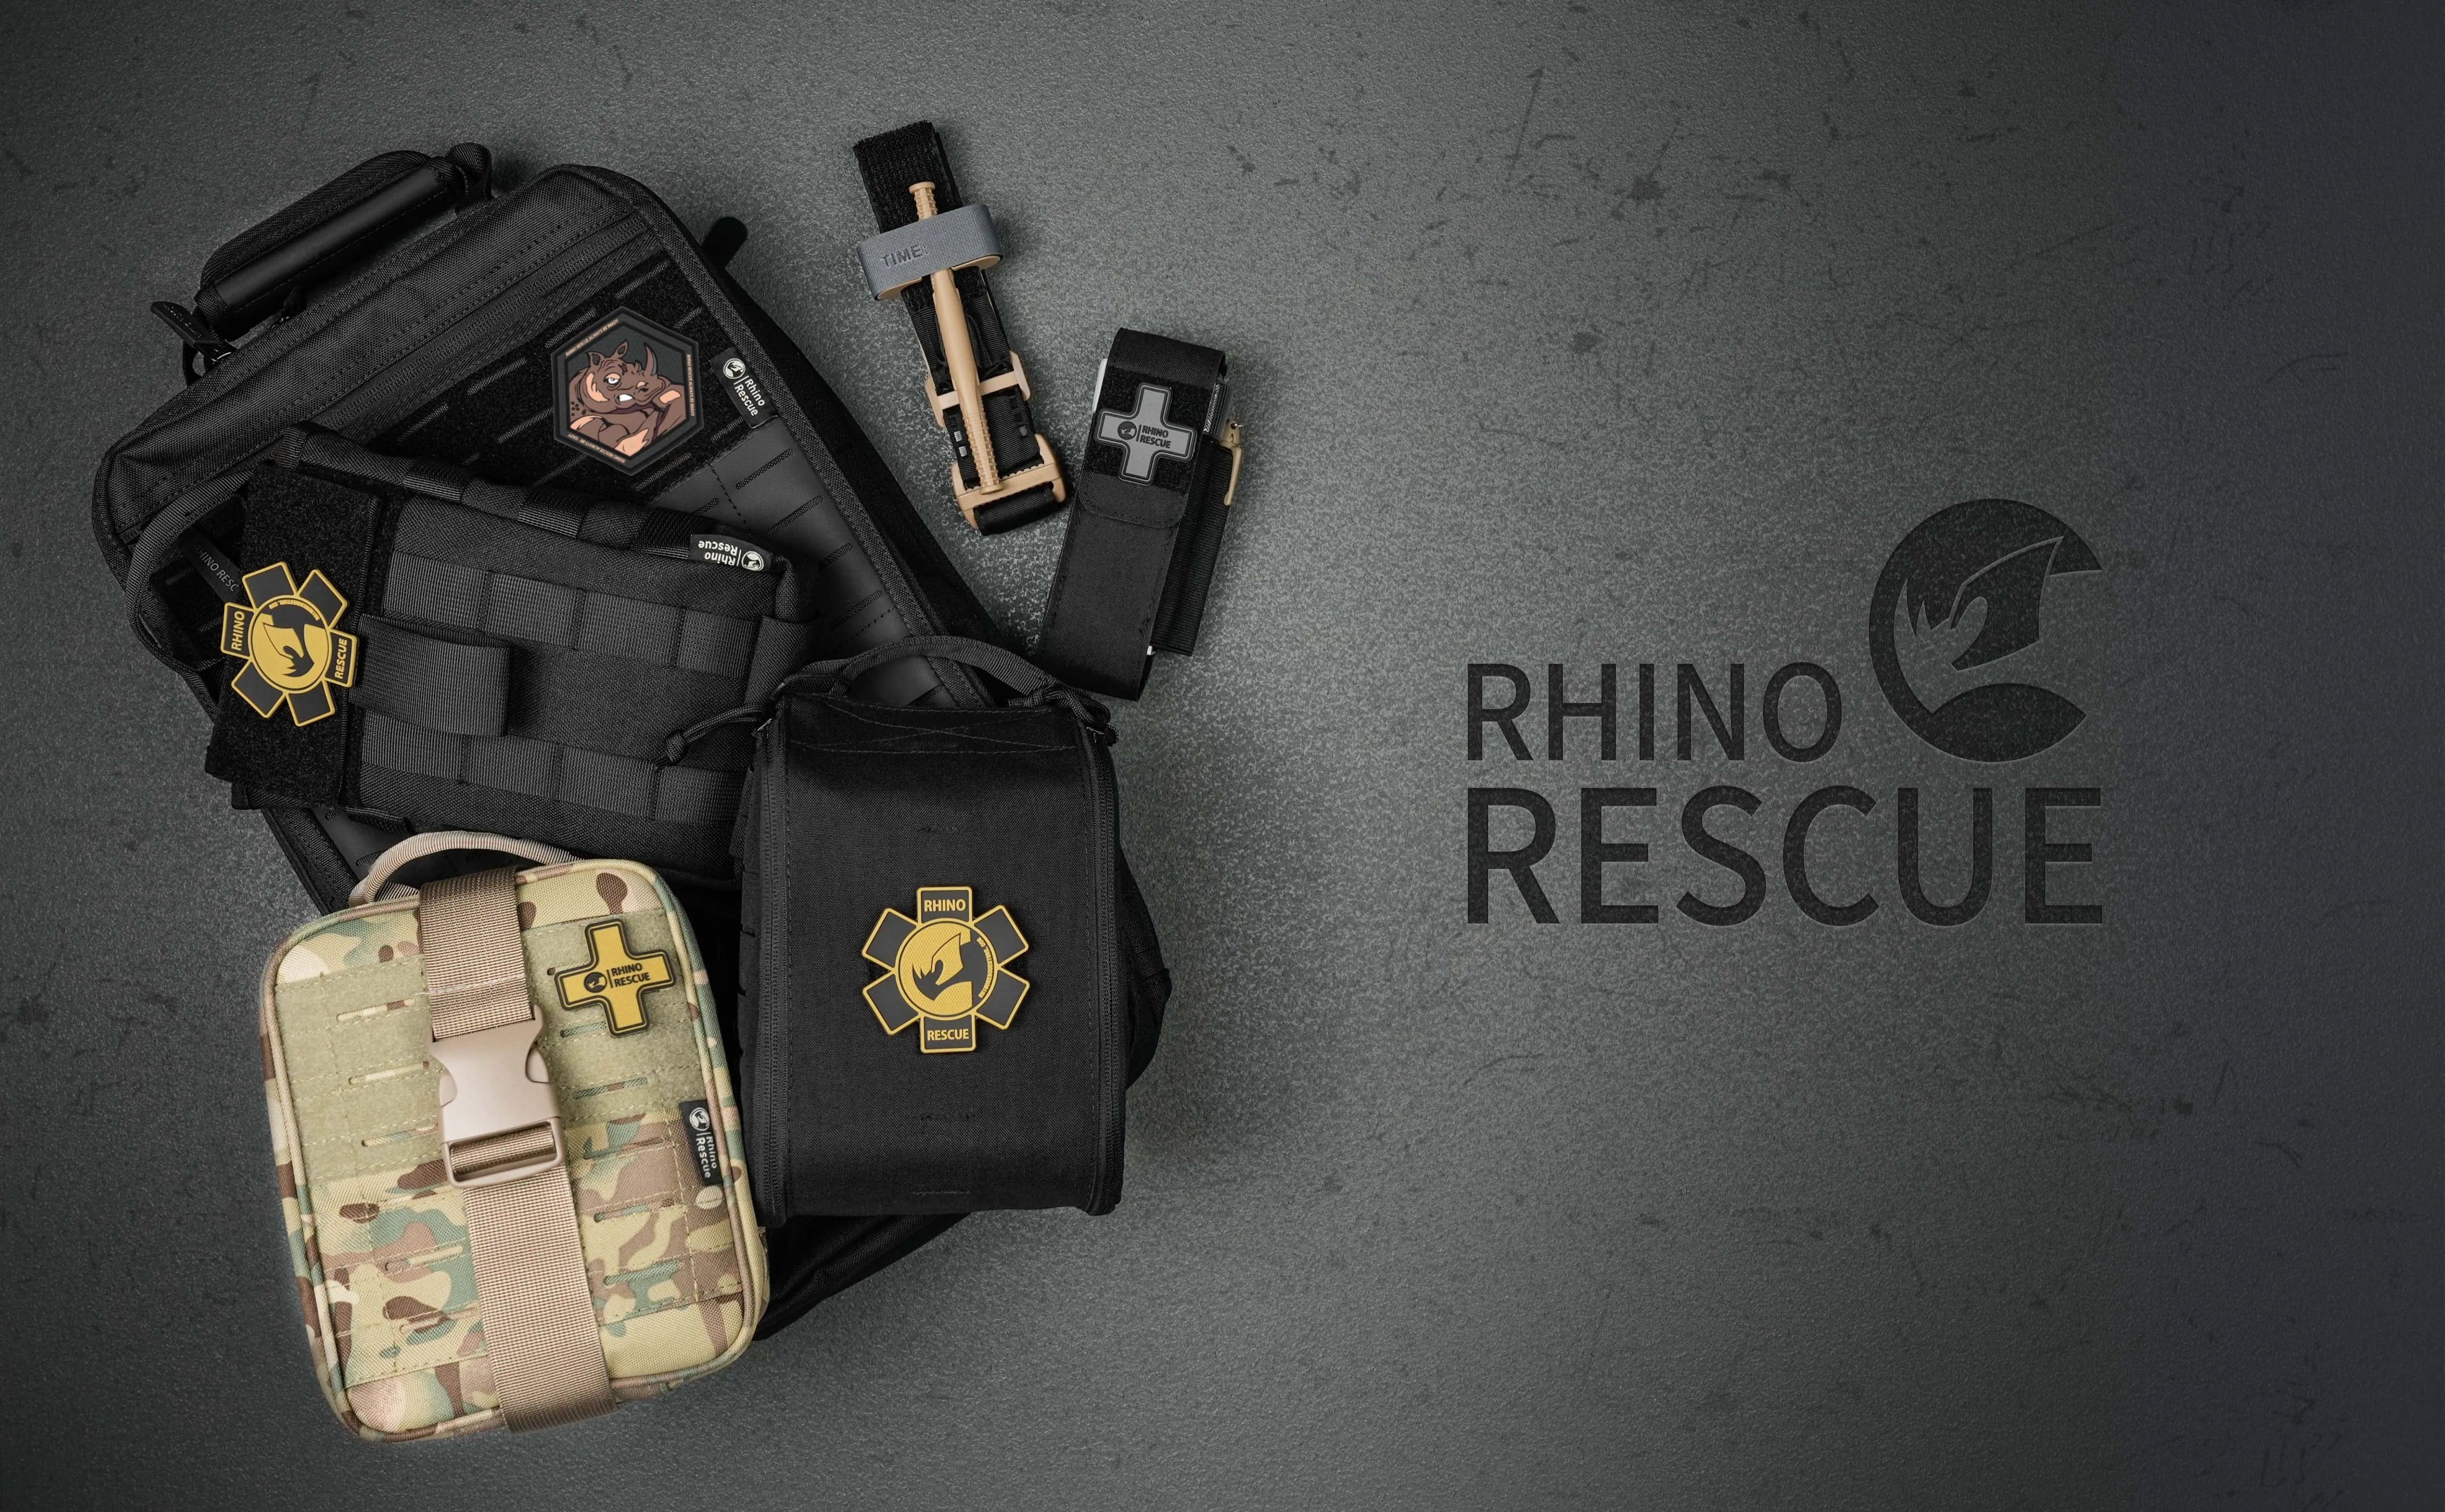 RHINO RESCUE – professionelle taktische Erste Hilfe / Trauma-Kit